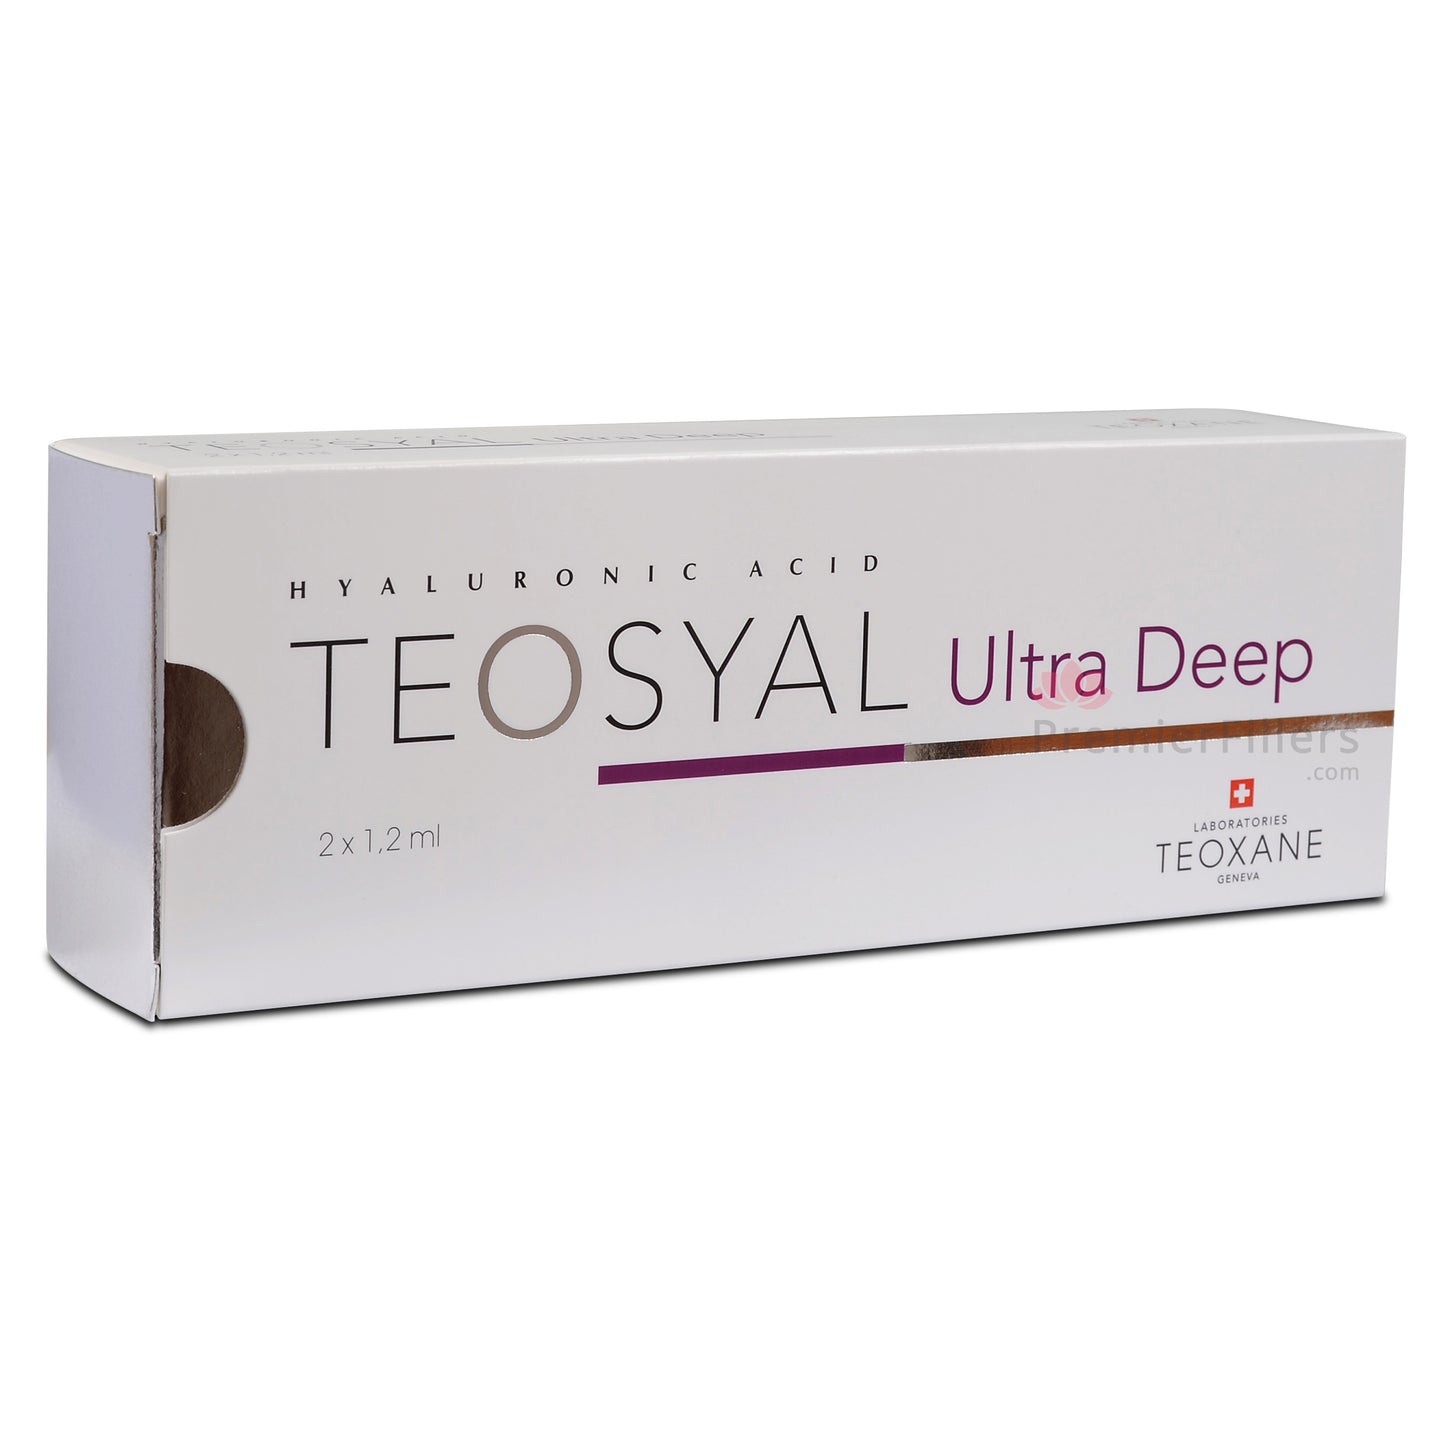 Teosyal Ultra Deep (2x1.2ml)